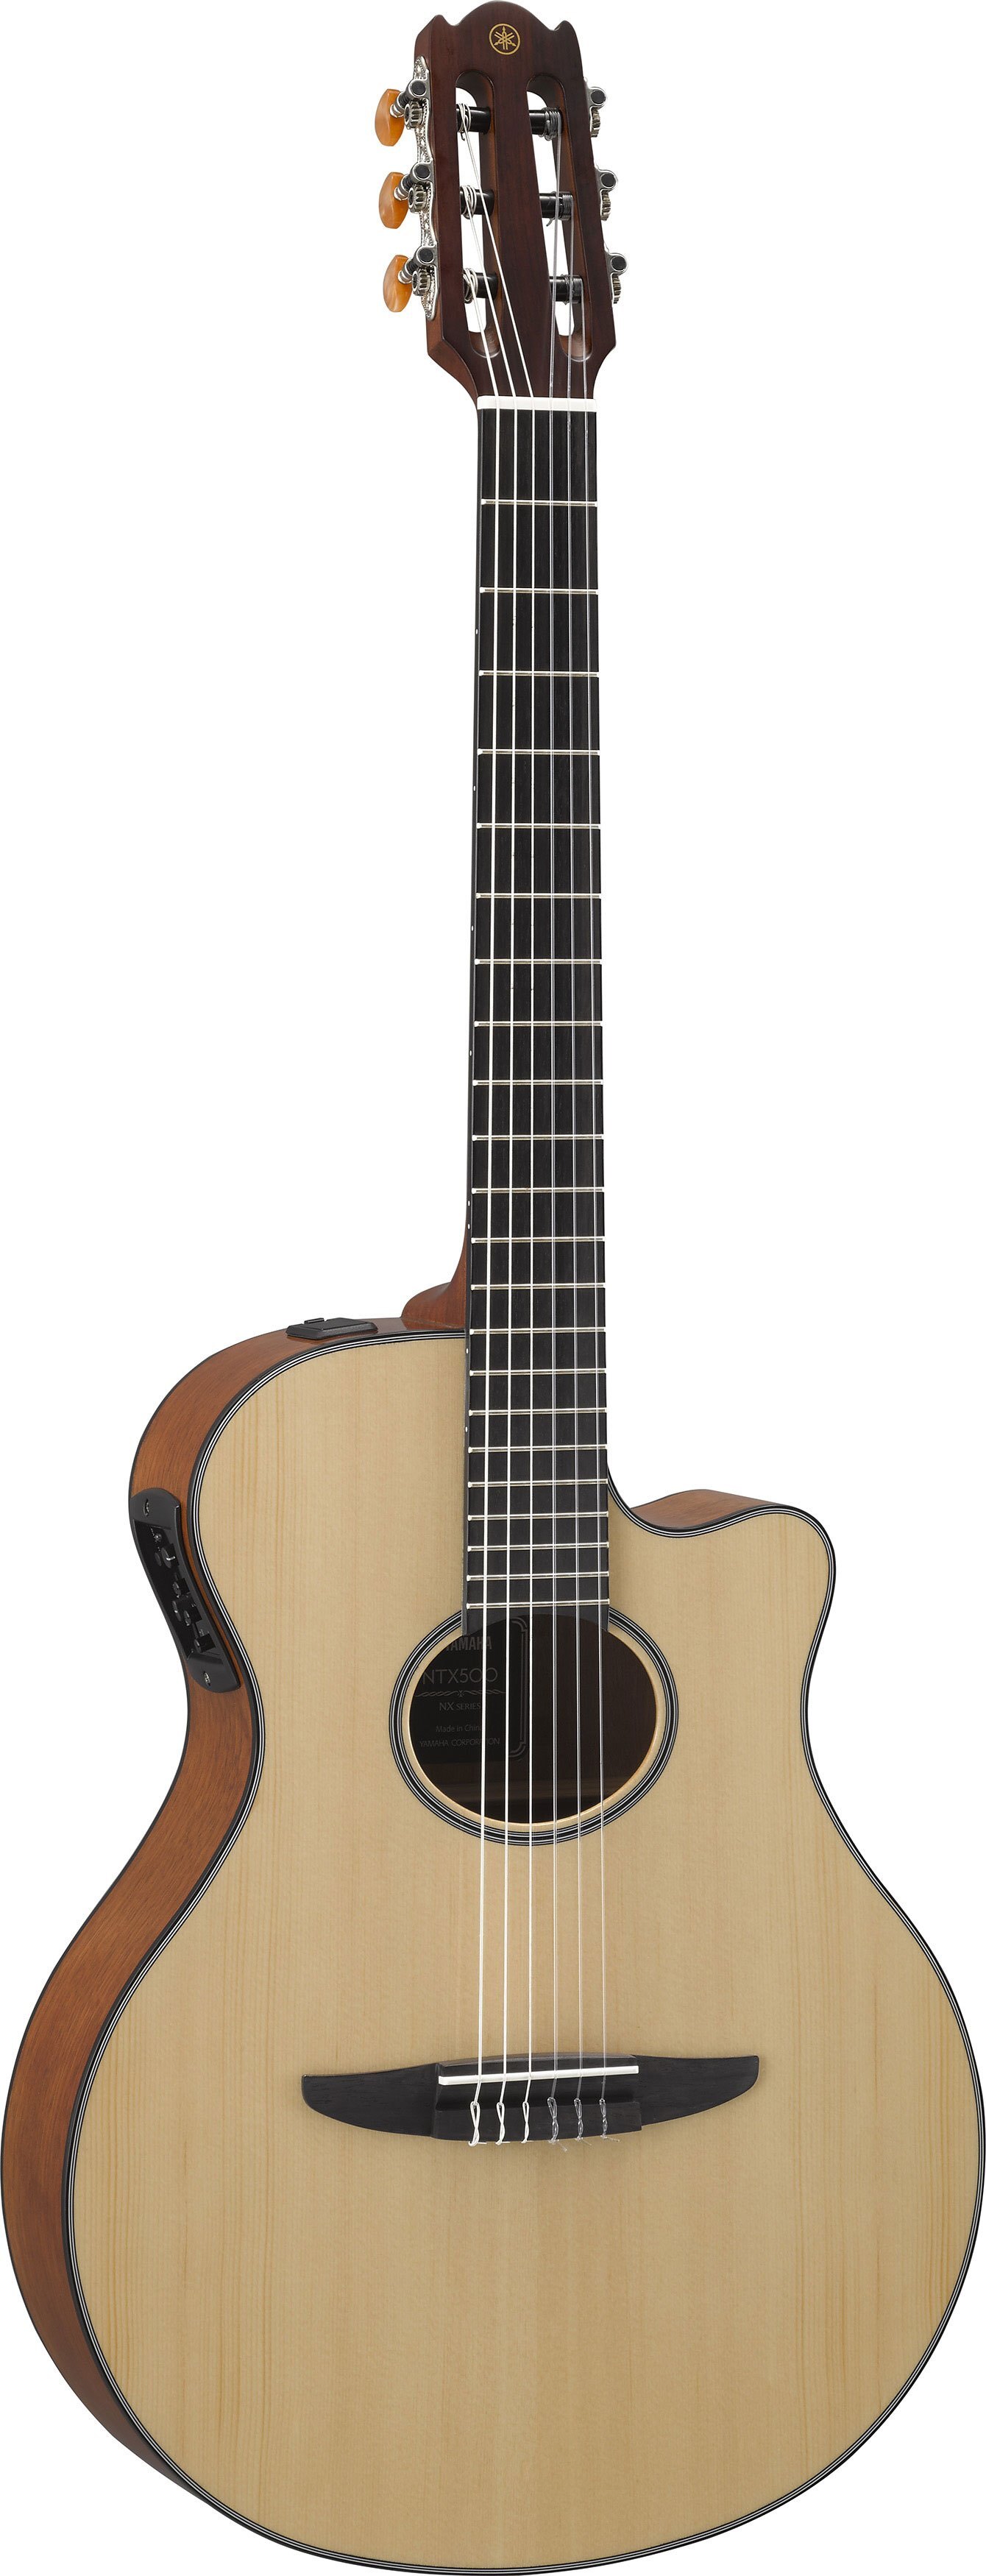 Đàn guitar Yamaha NTX 500